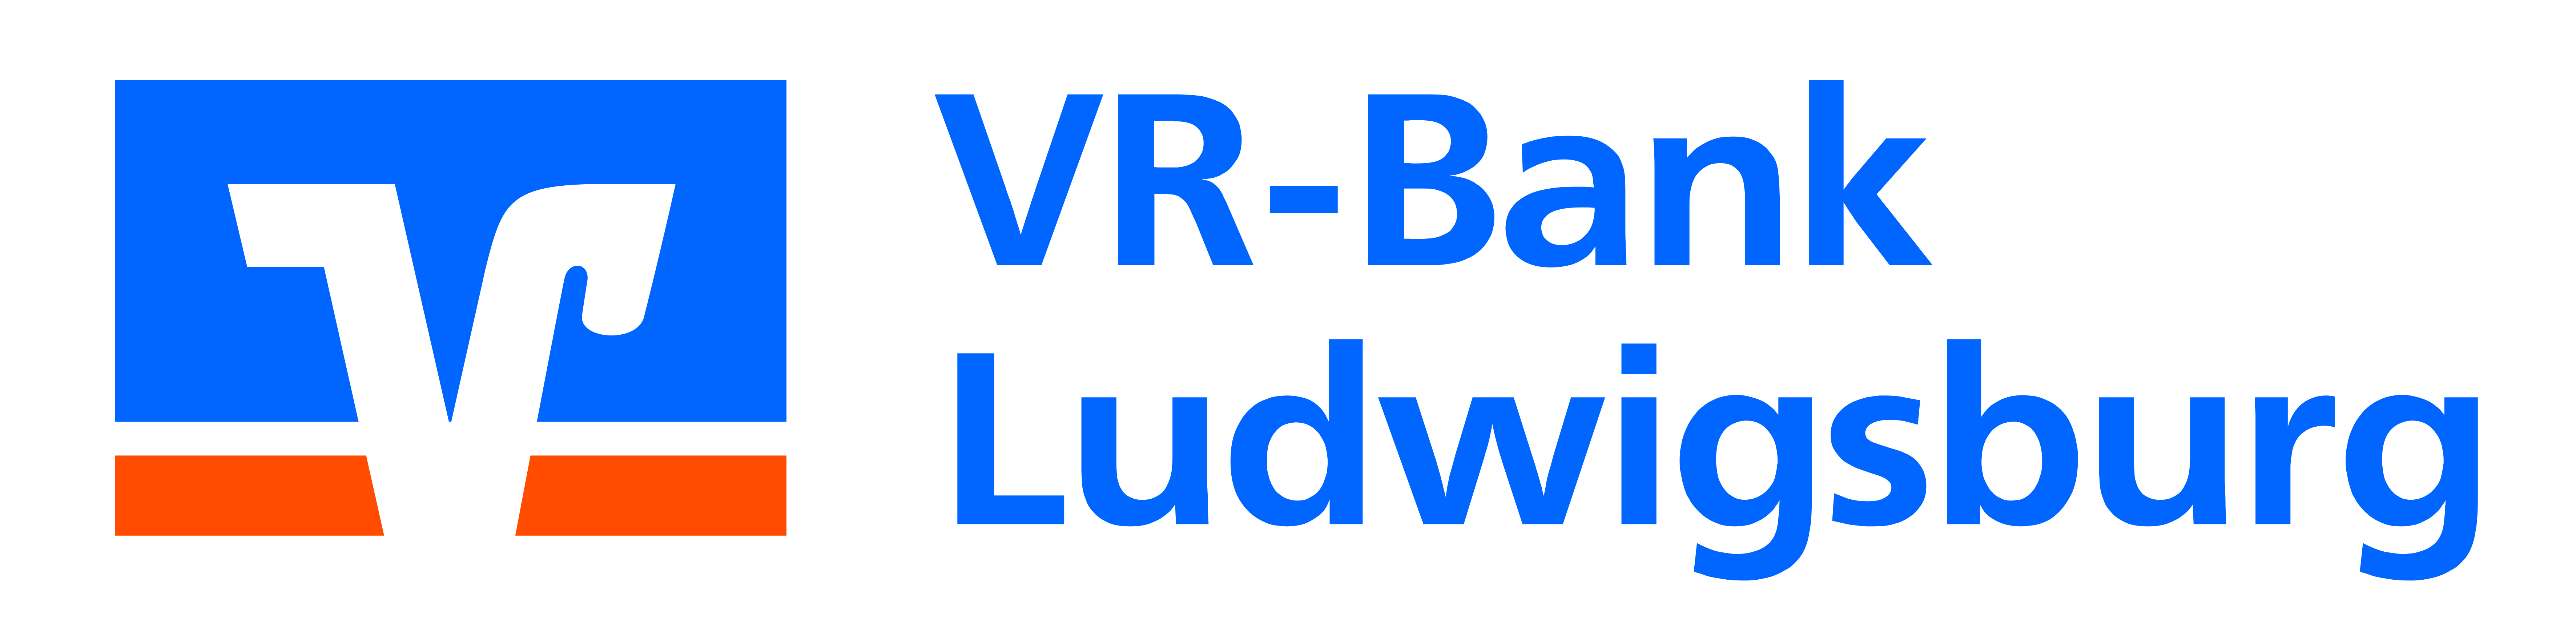 VR-Bank Ludwigsburg eG